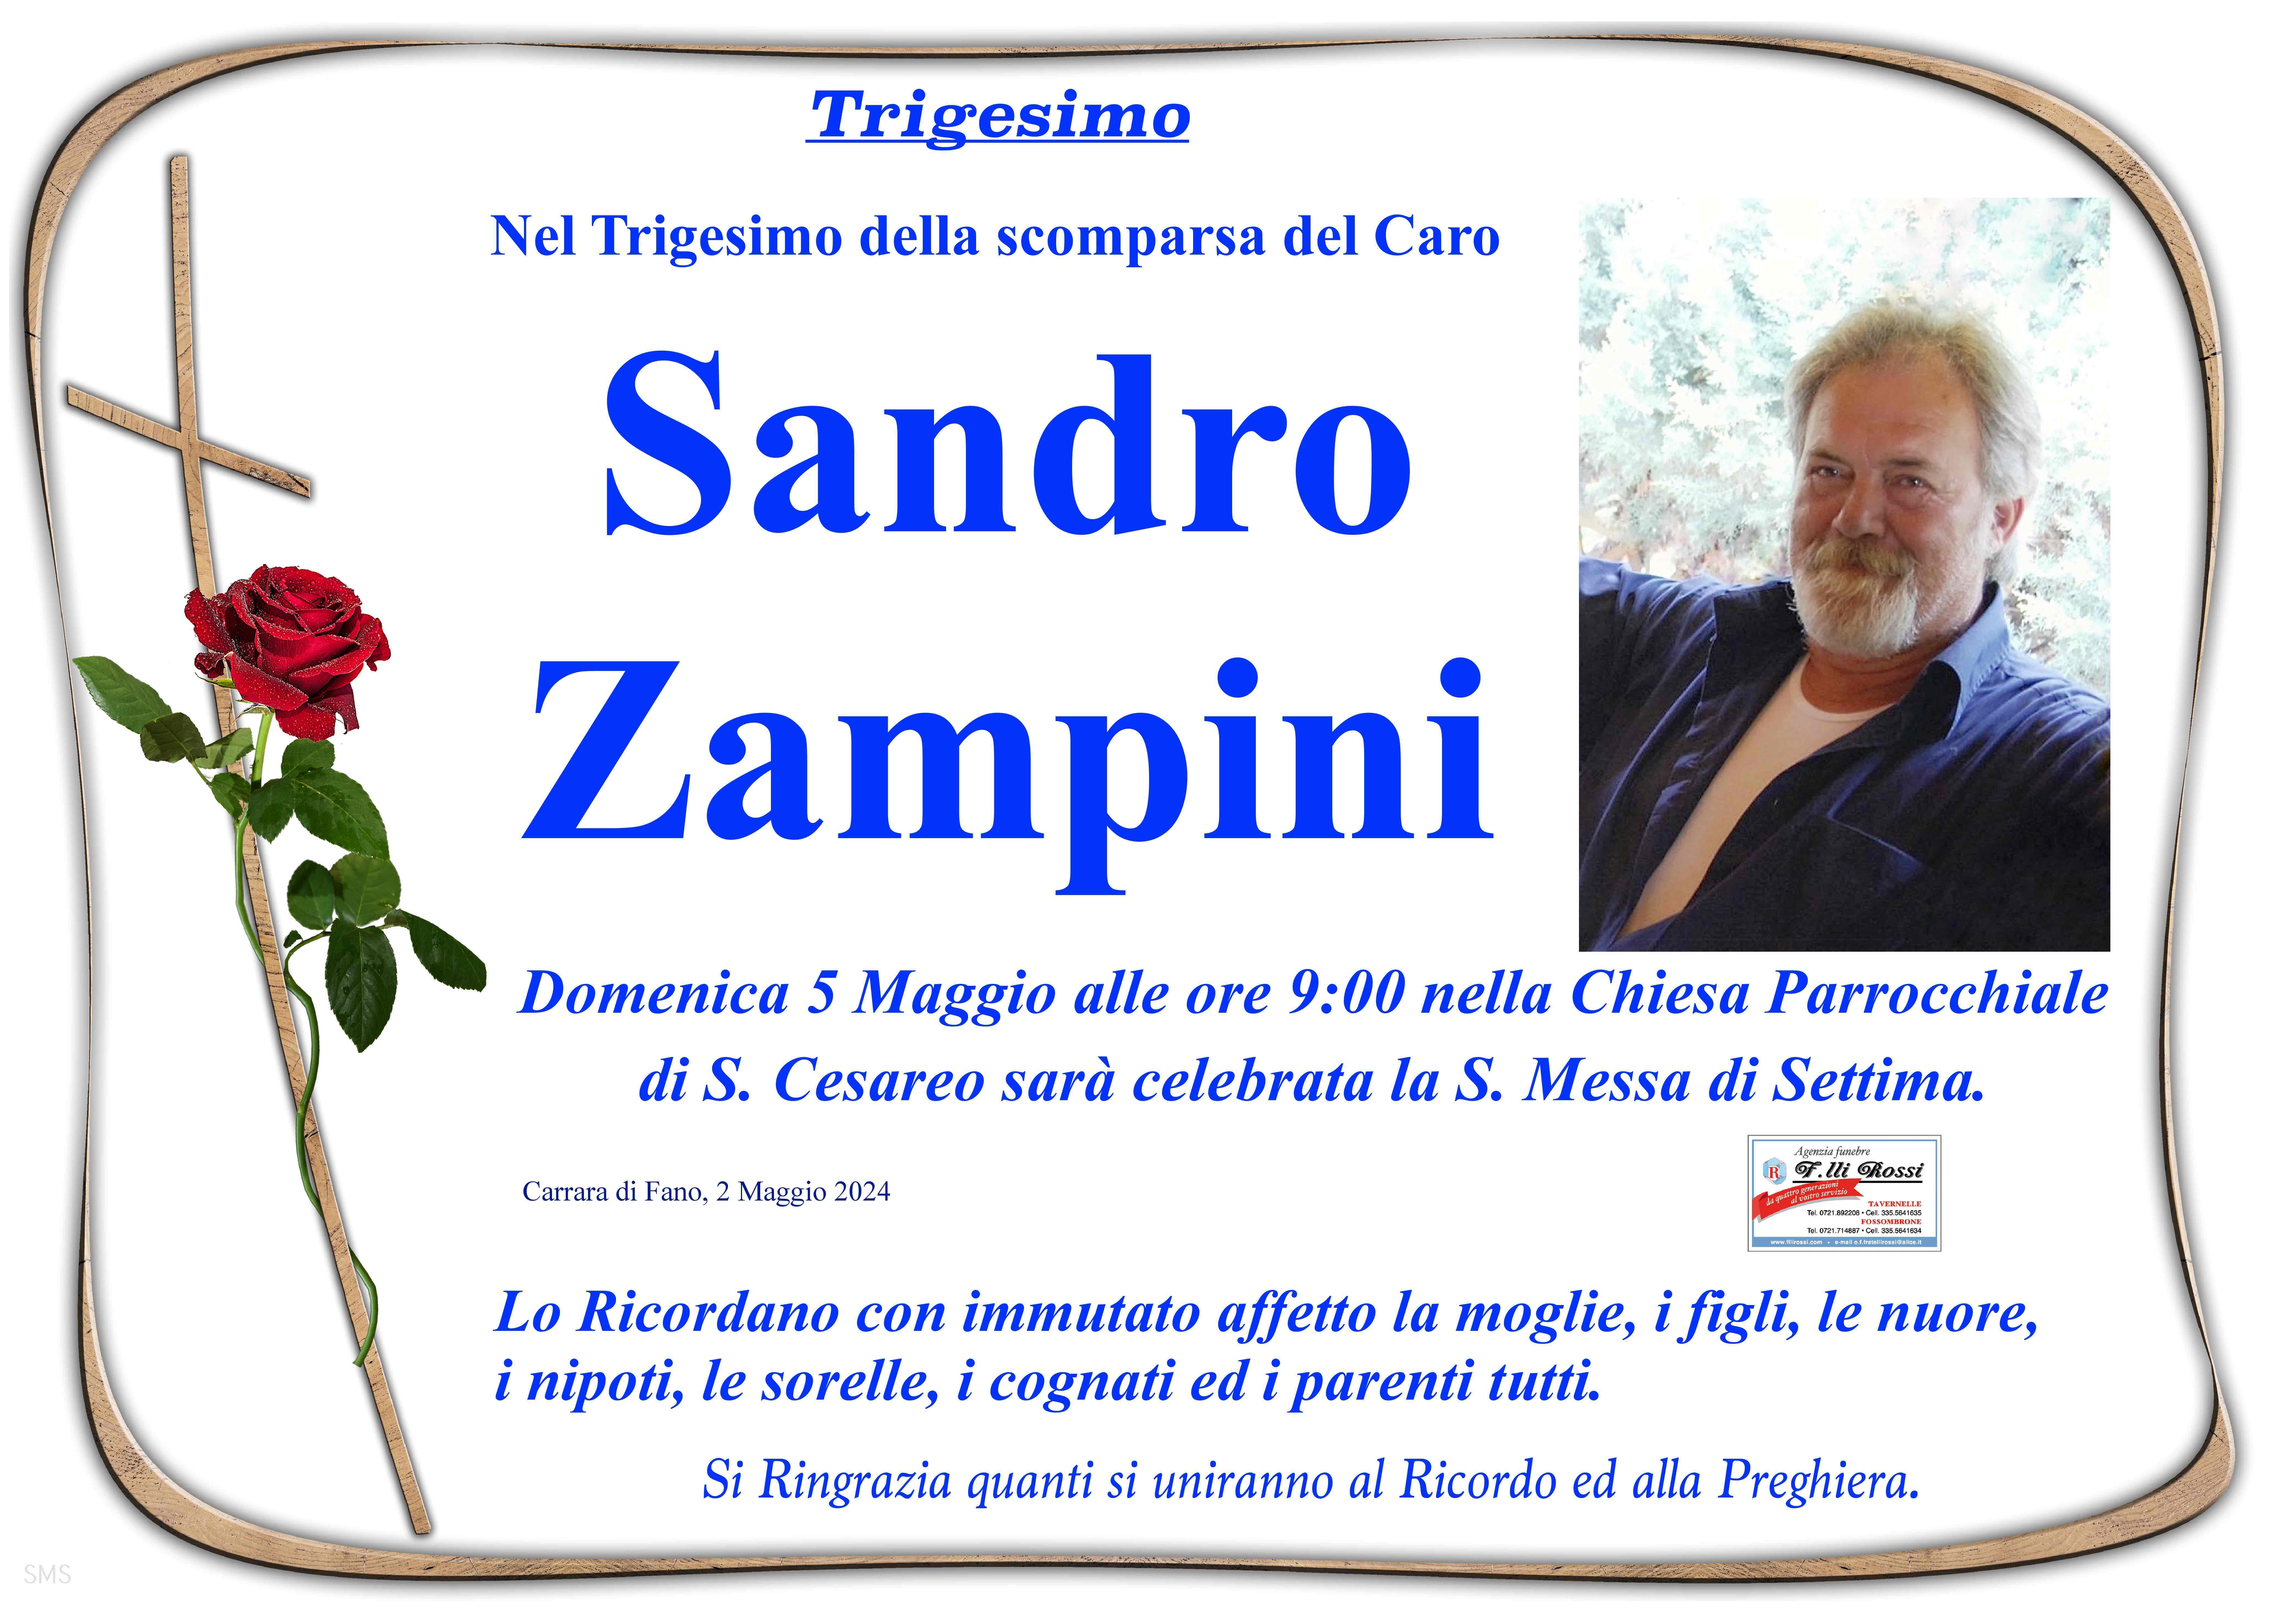 Sandro Zampini